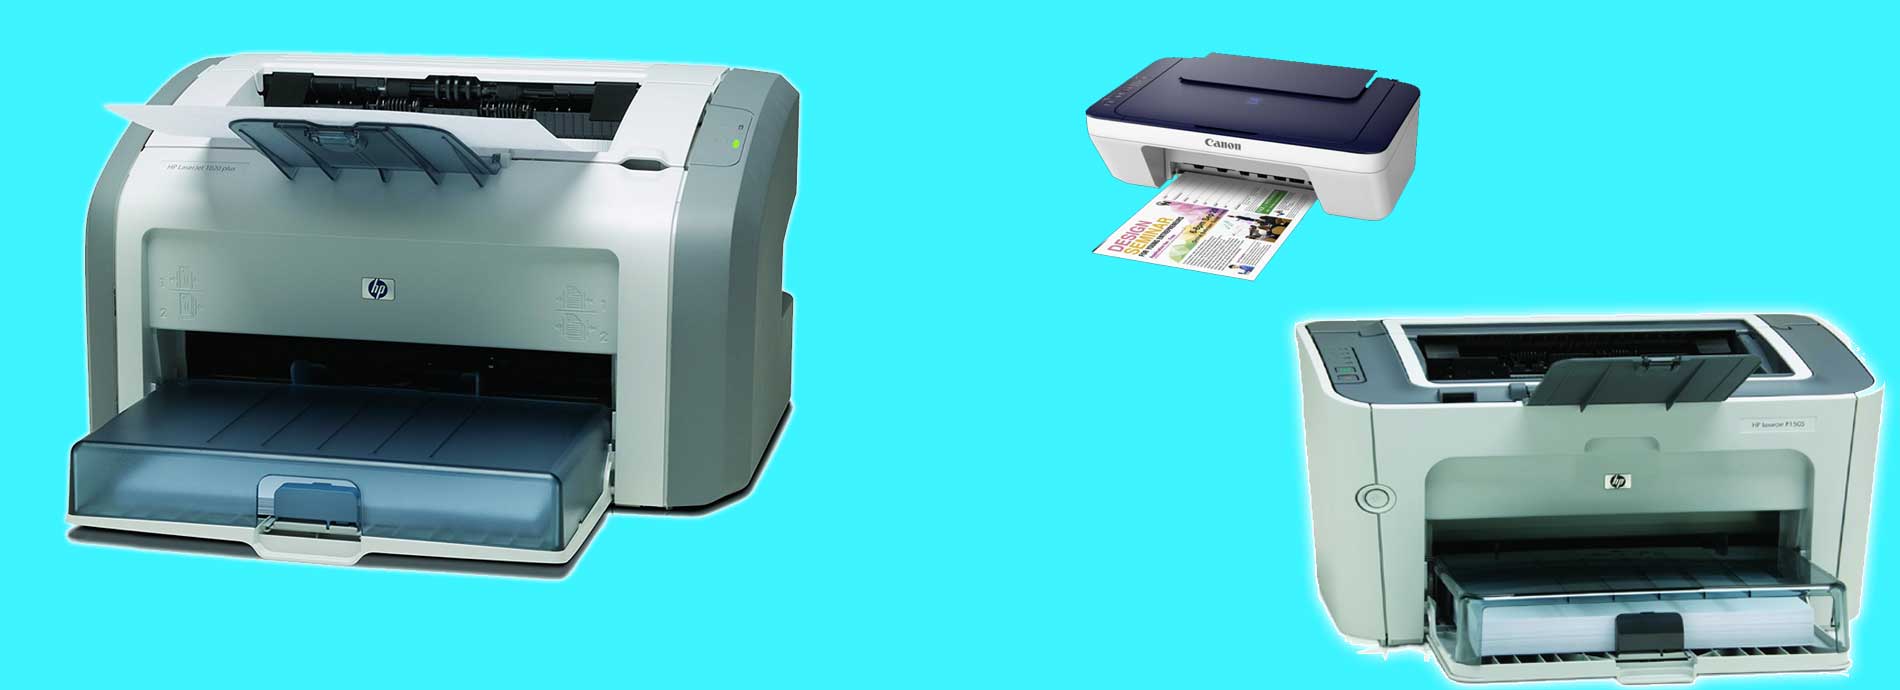 printer-on-rent